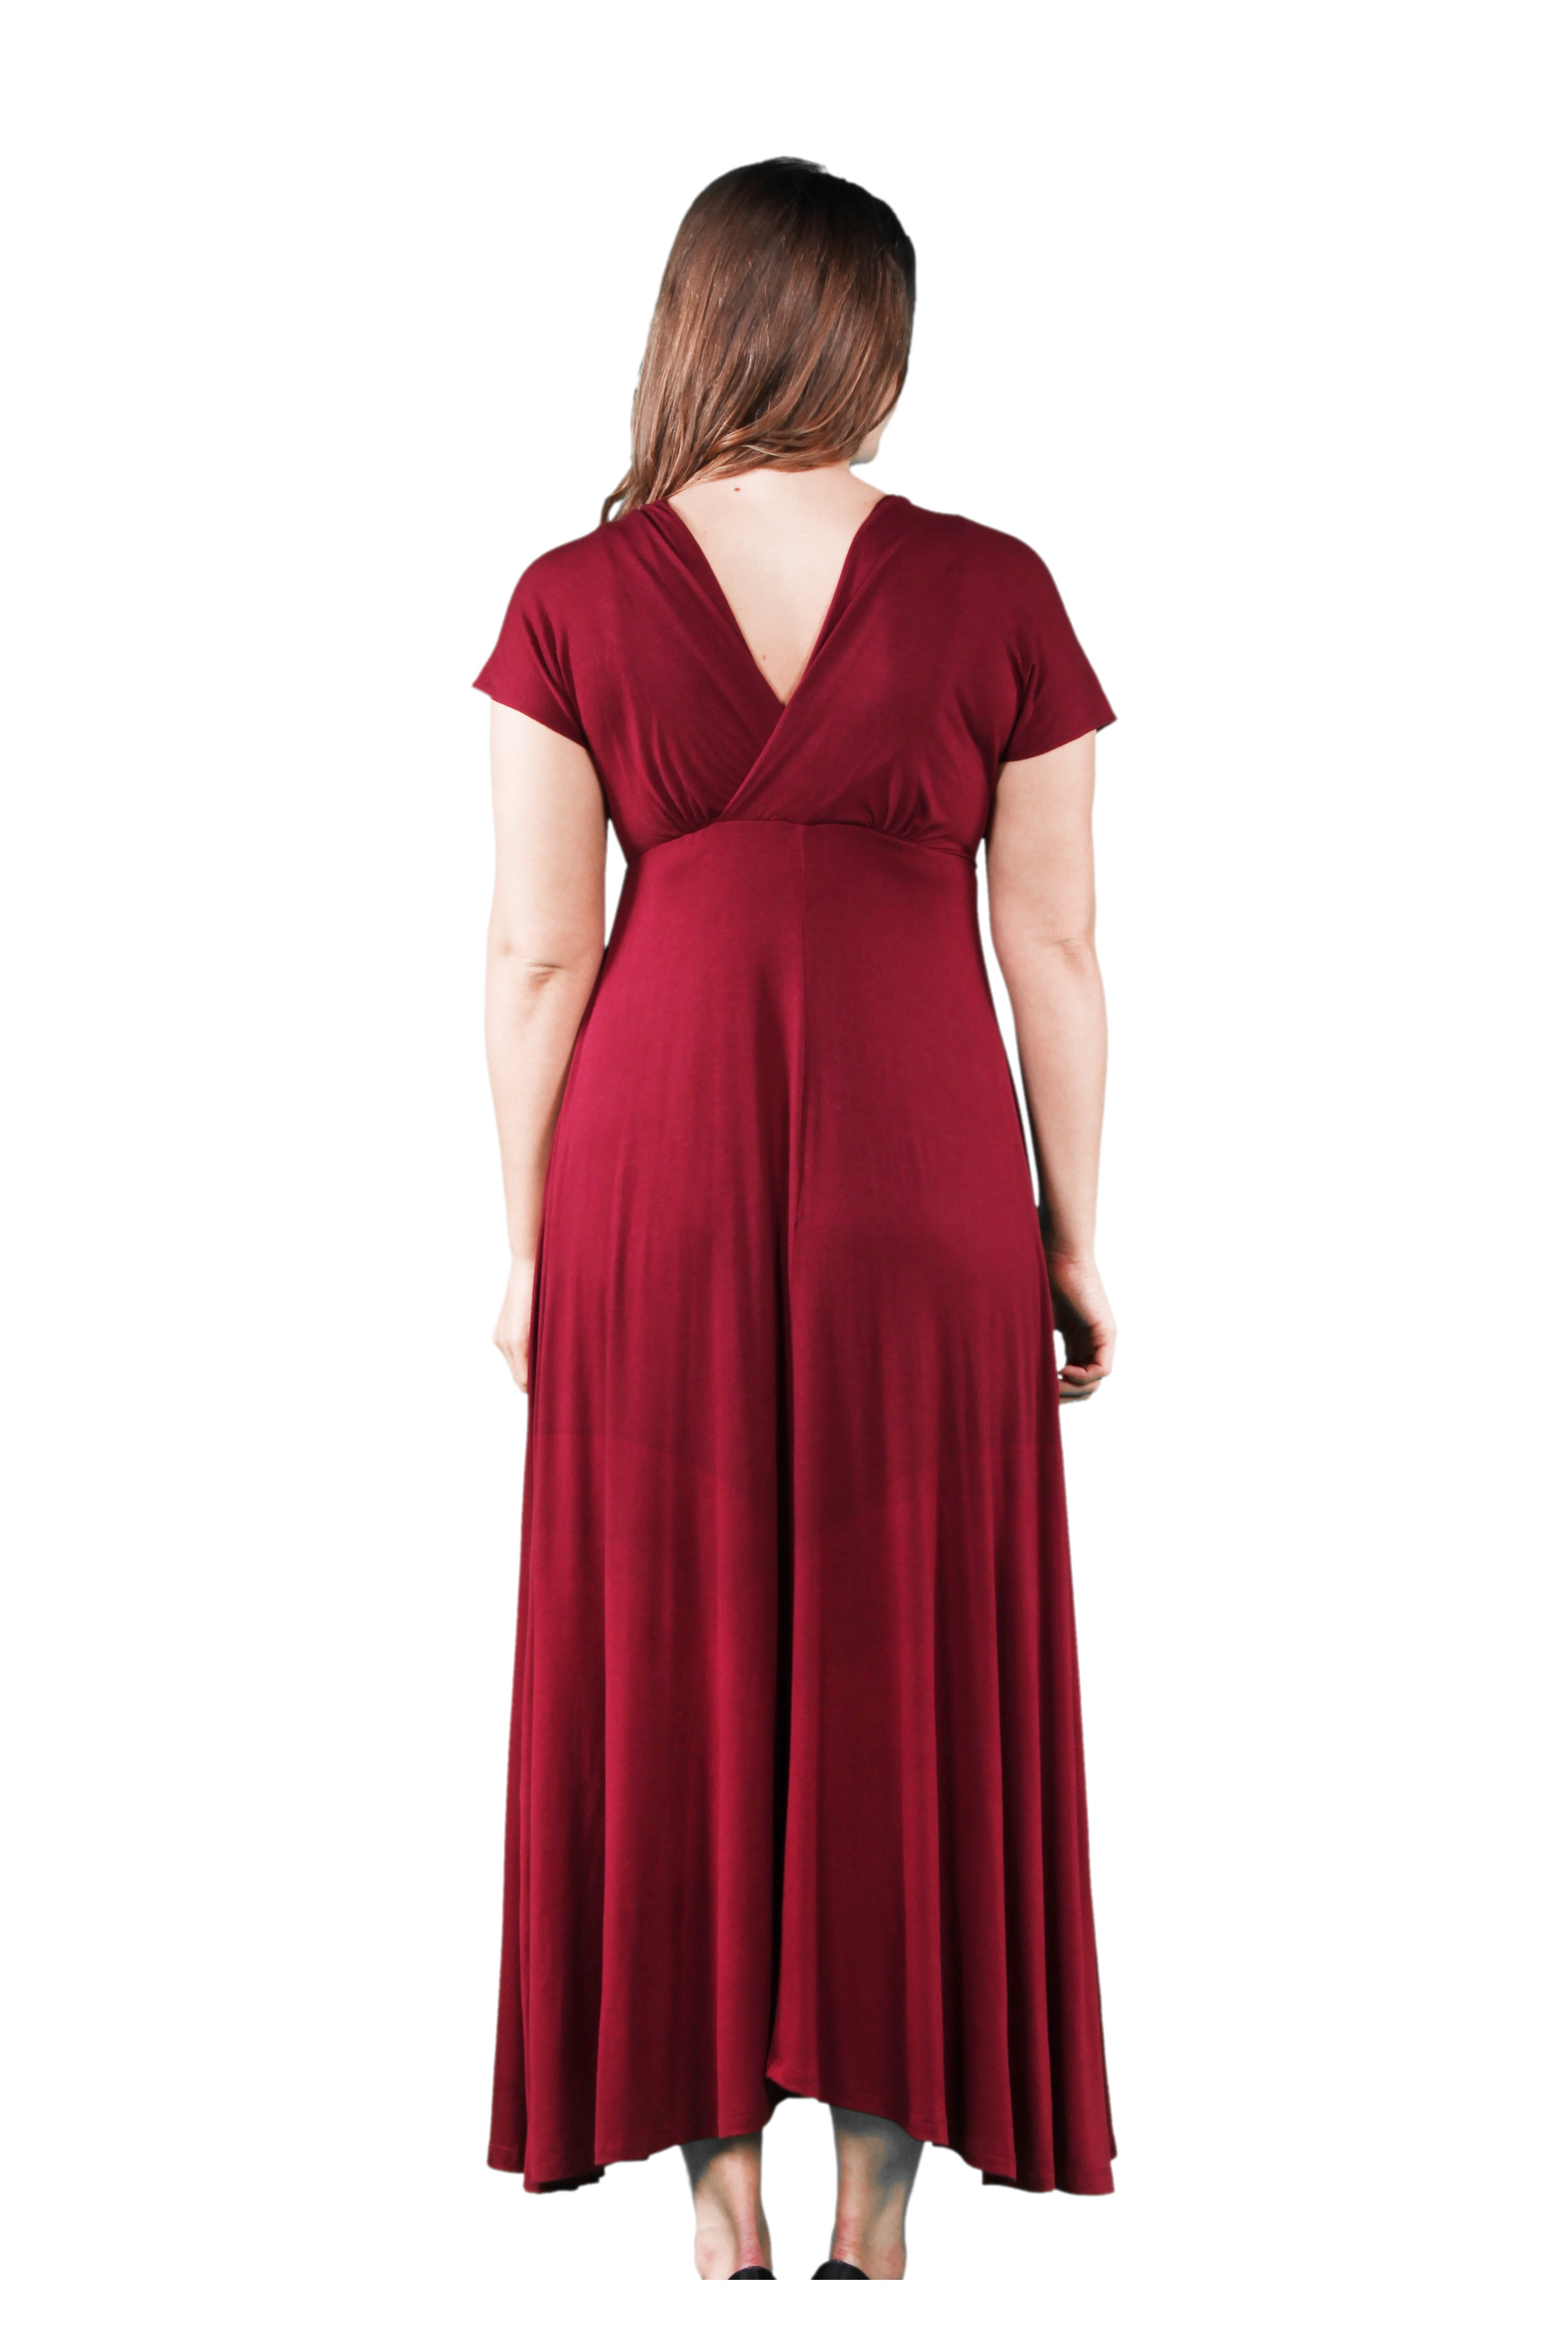 Luxury Woman Evening Dress Maxi Dress Winter 5x Plus Size Women Clothing  Long Knitted Dress Wholesale Bulk Dropshipping